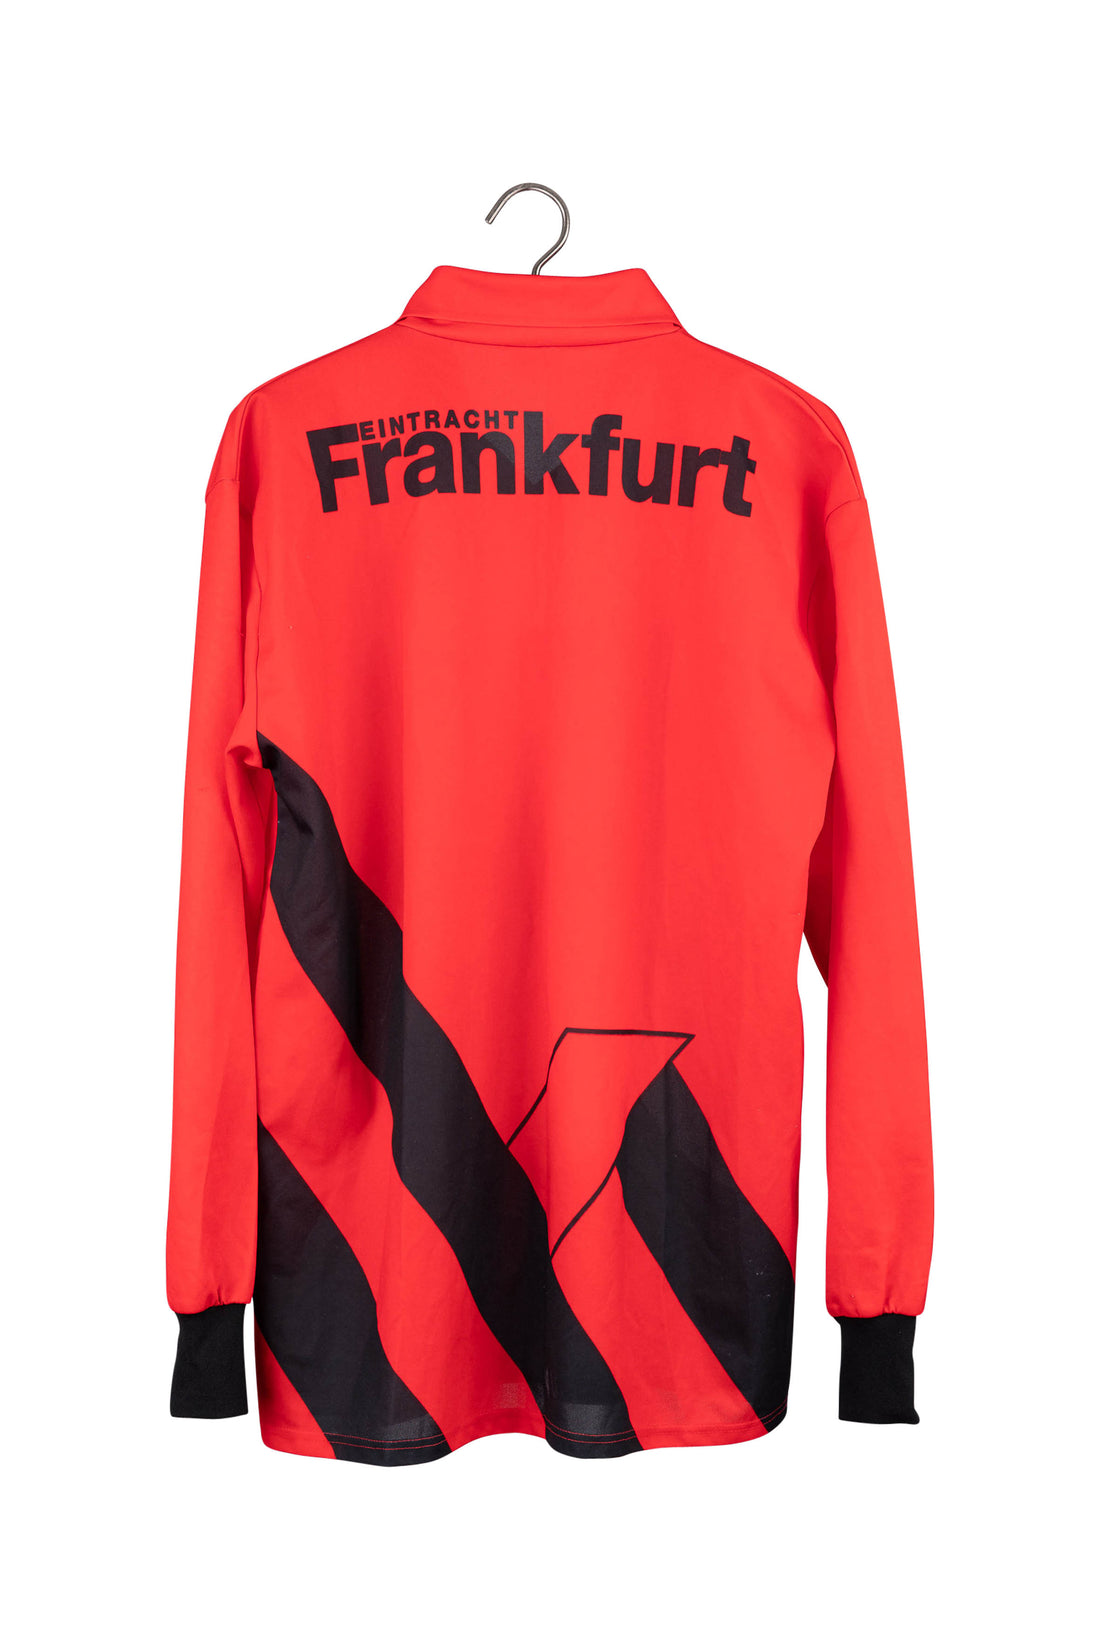 Eintracht Frankfurt 1993 - 1995 Home Football Shirt